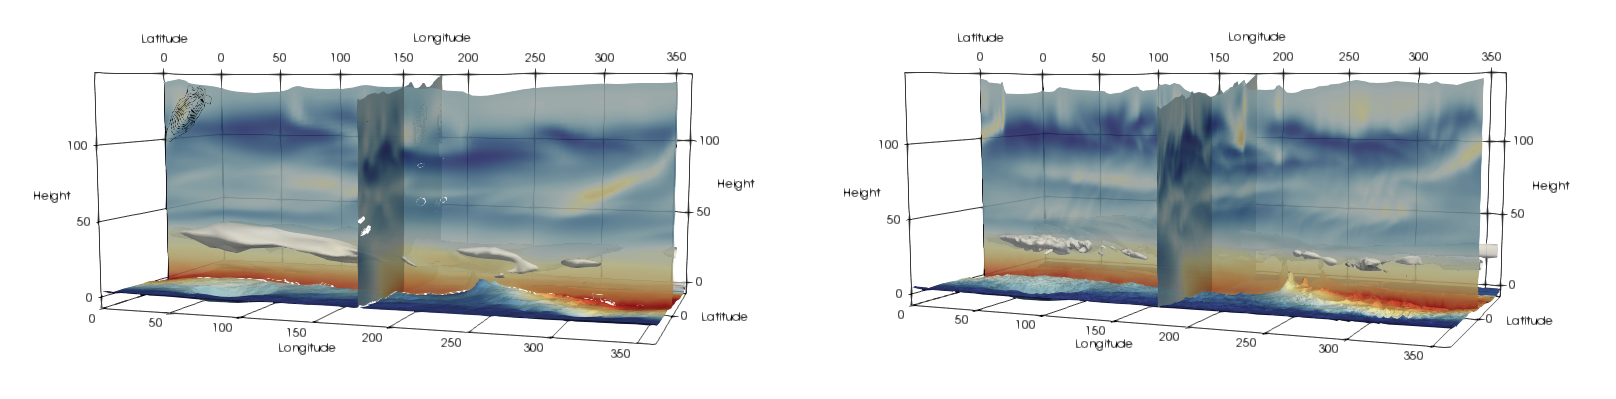 GEM-Mars model simulations at different resolutions